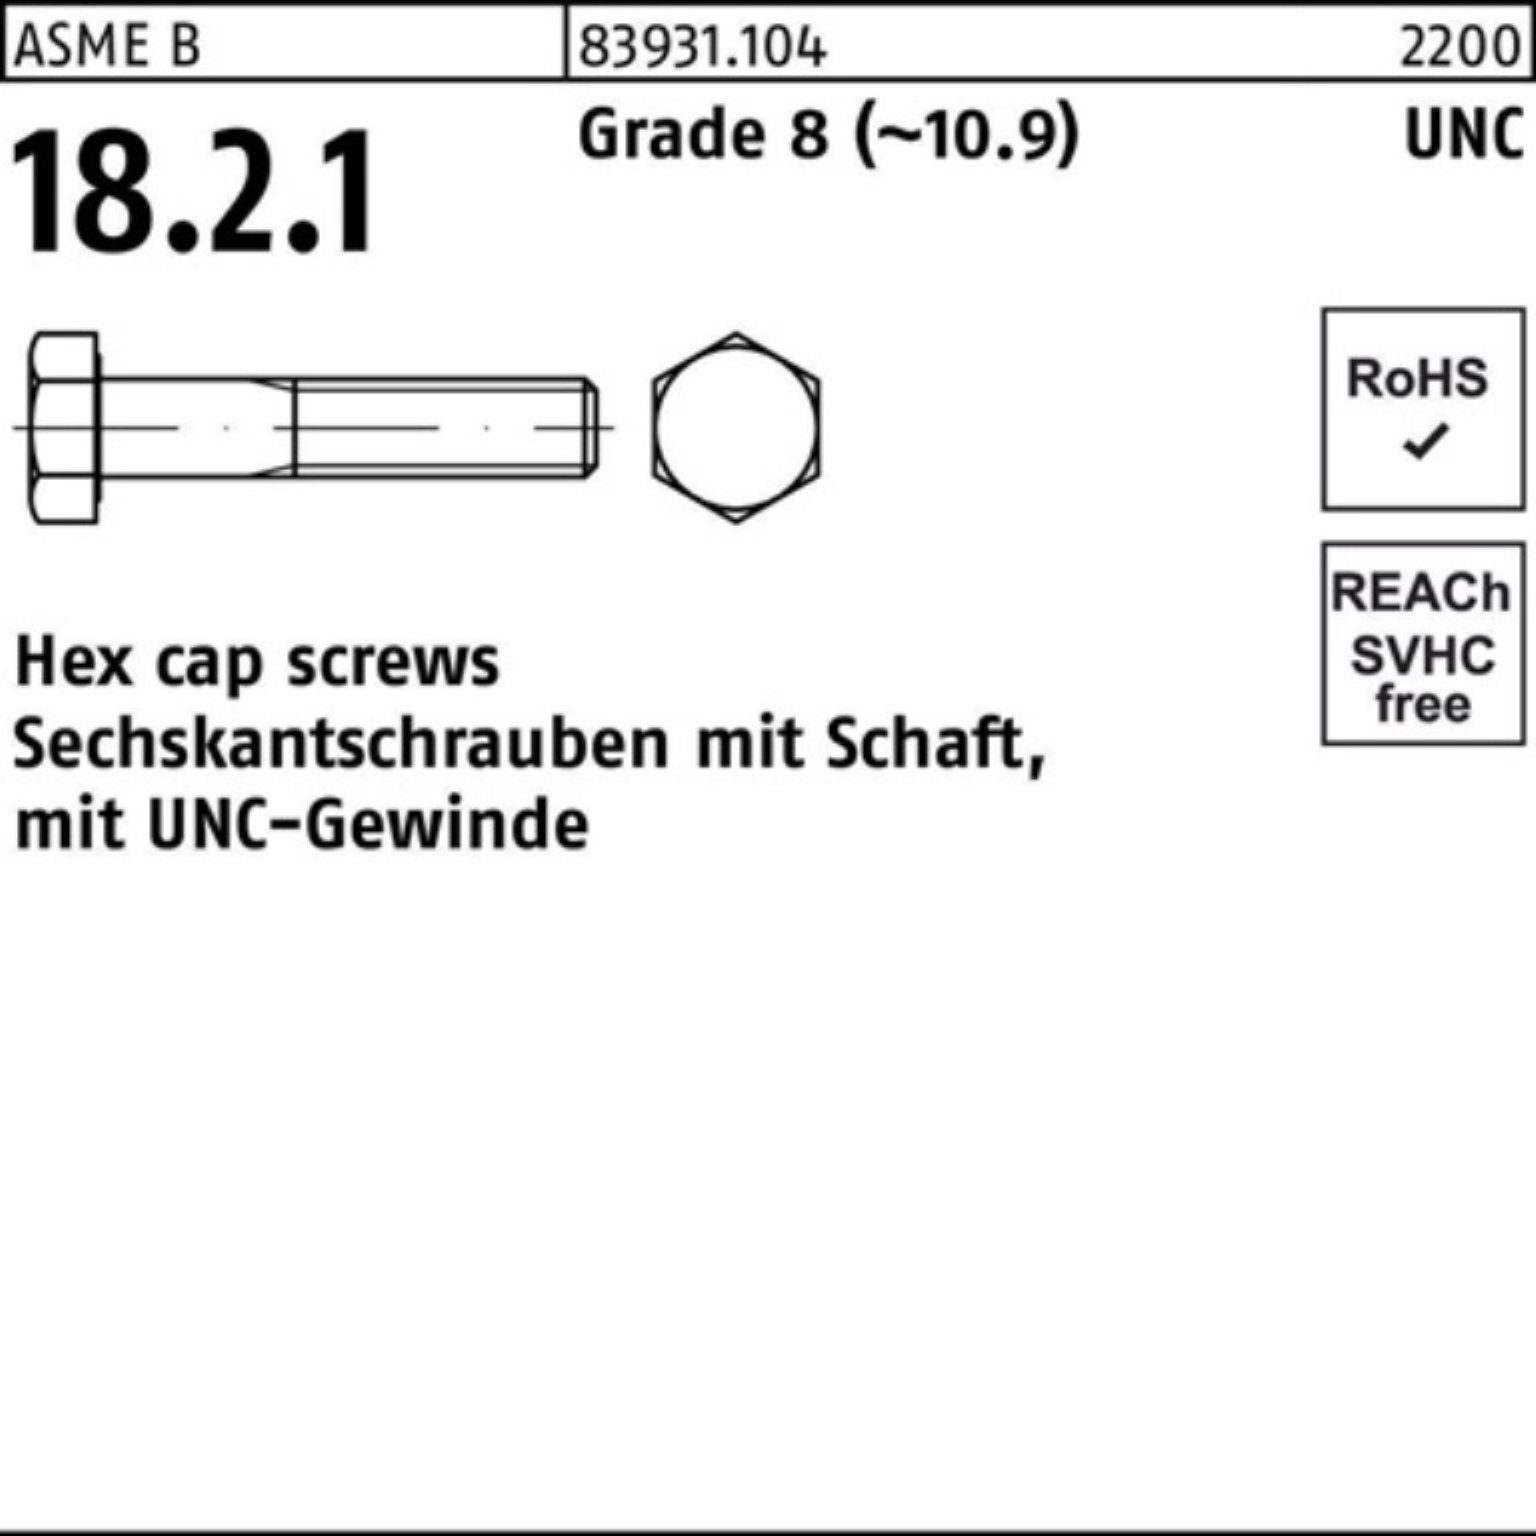 1x 3 1/2 UNC-Gewinde/Schaft 100er Reyher Pack R Grade Sechskantschraube Sechskantschraube 83931